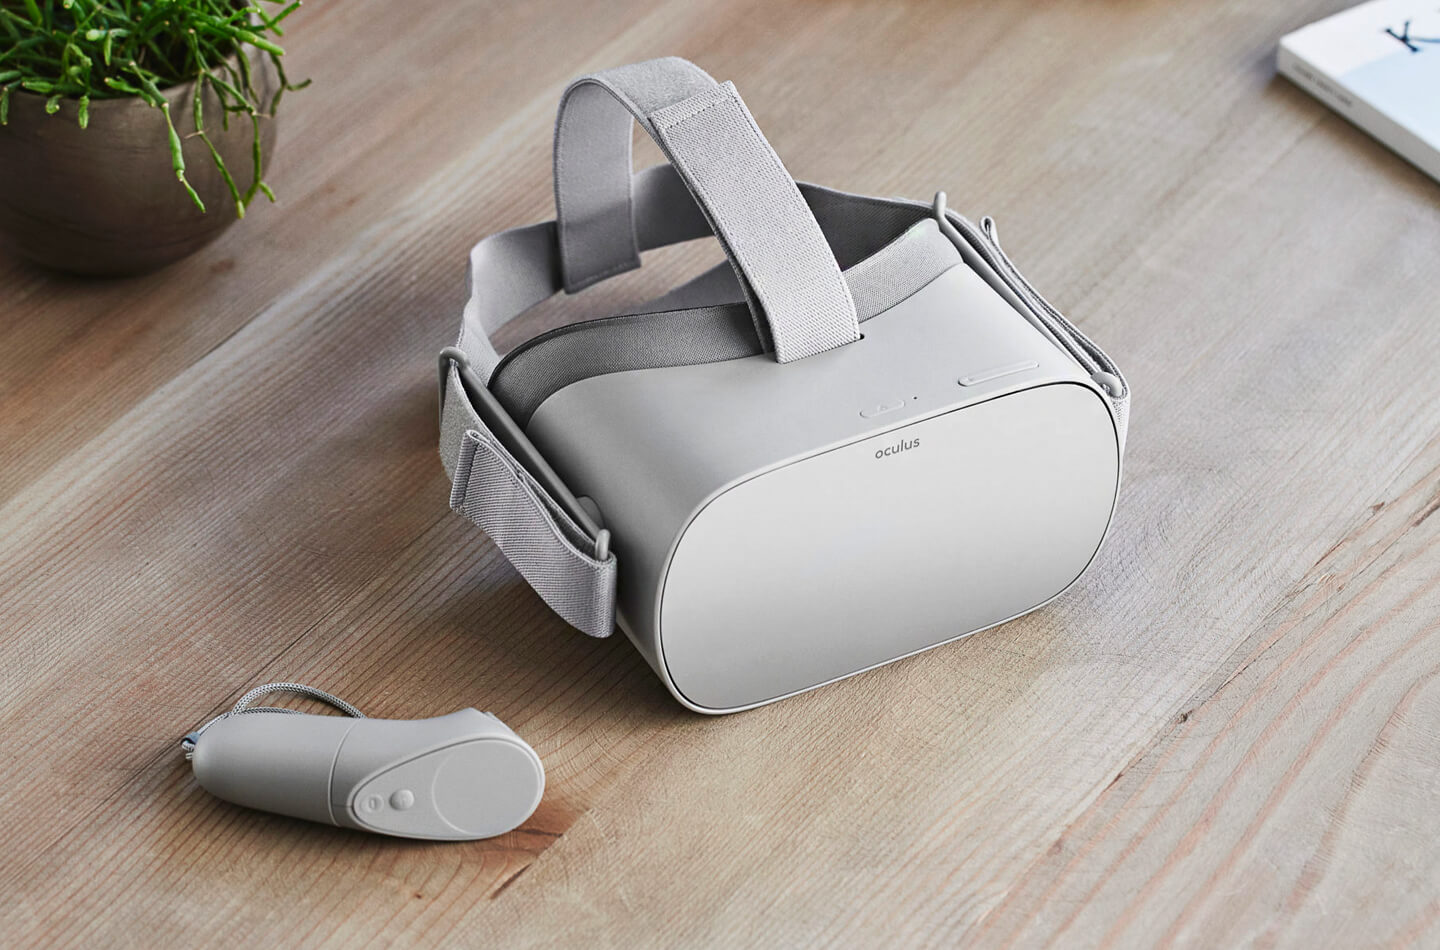 Oculus Go standalone VR headset on Amazon LetsGoDigital